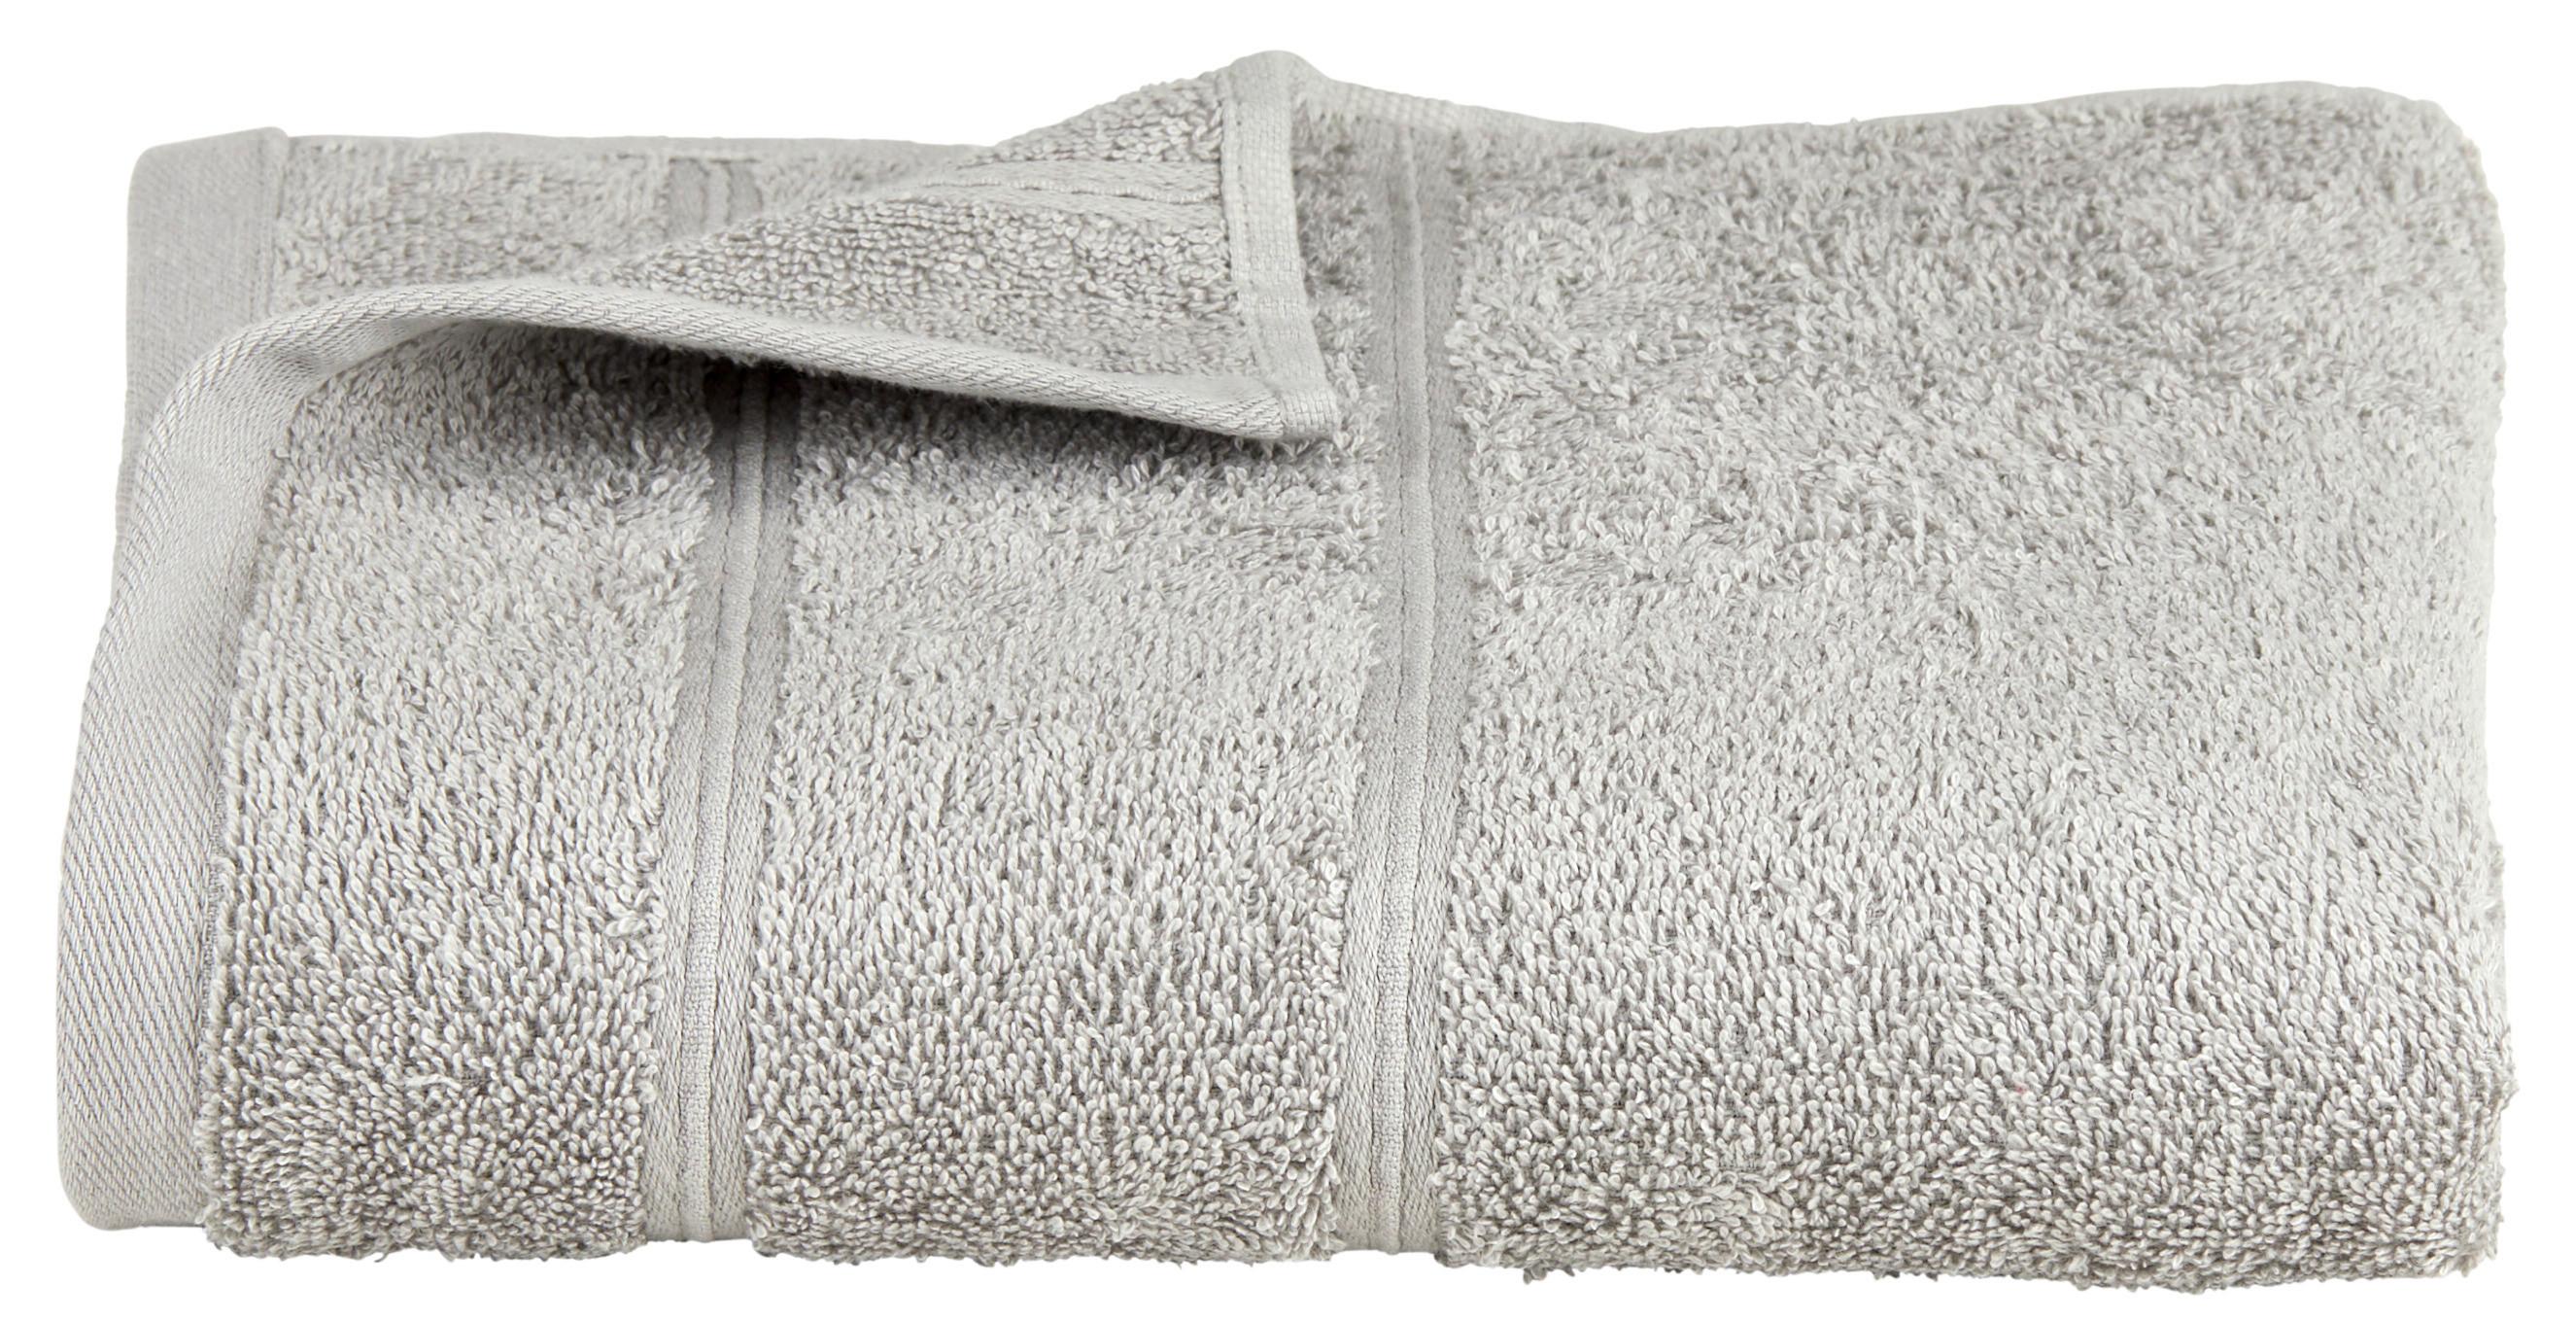 Brisača Melanie - svetlo siva, tekstil (50/100cm) - Modern Living